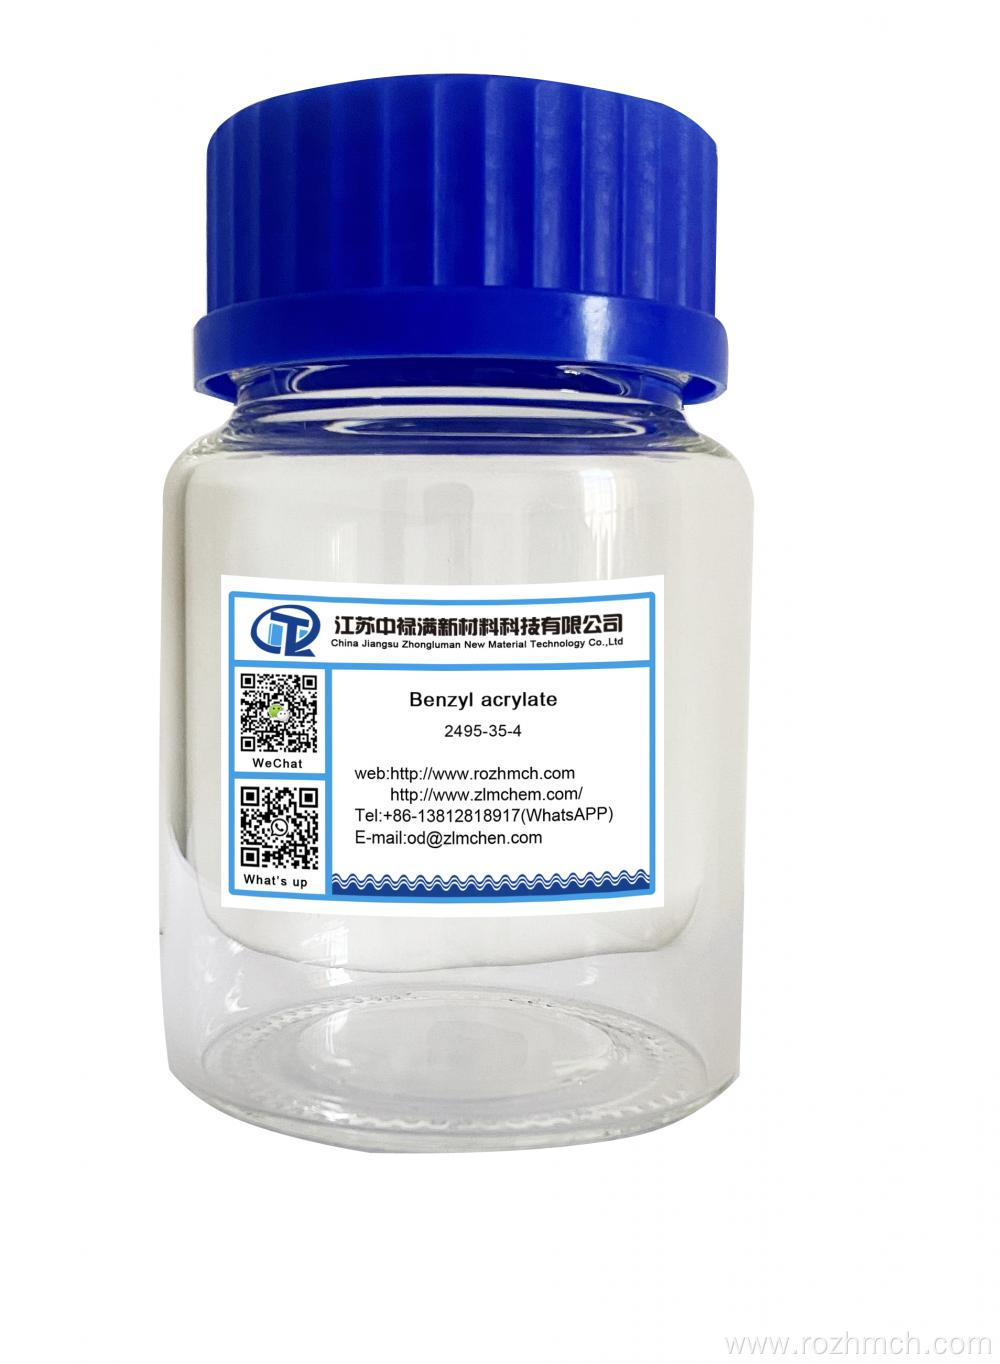 Benzyl Acrylate CAS 2495-35-4